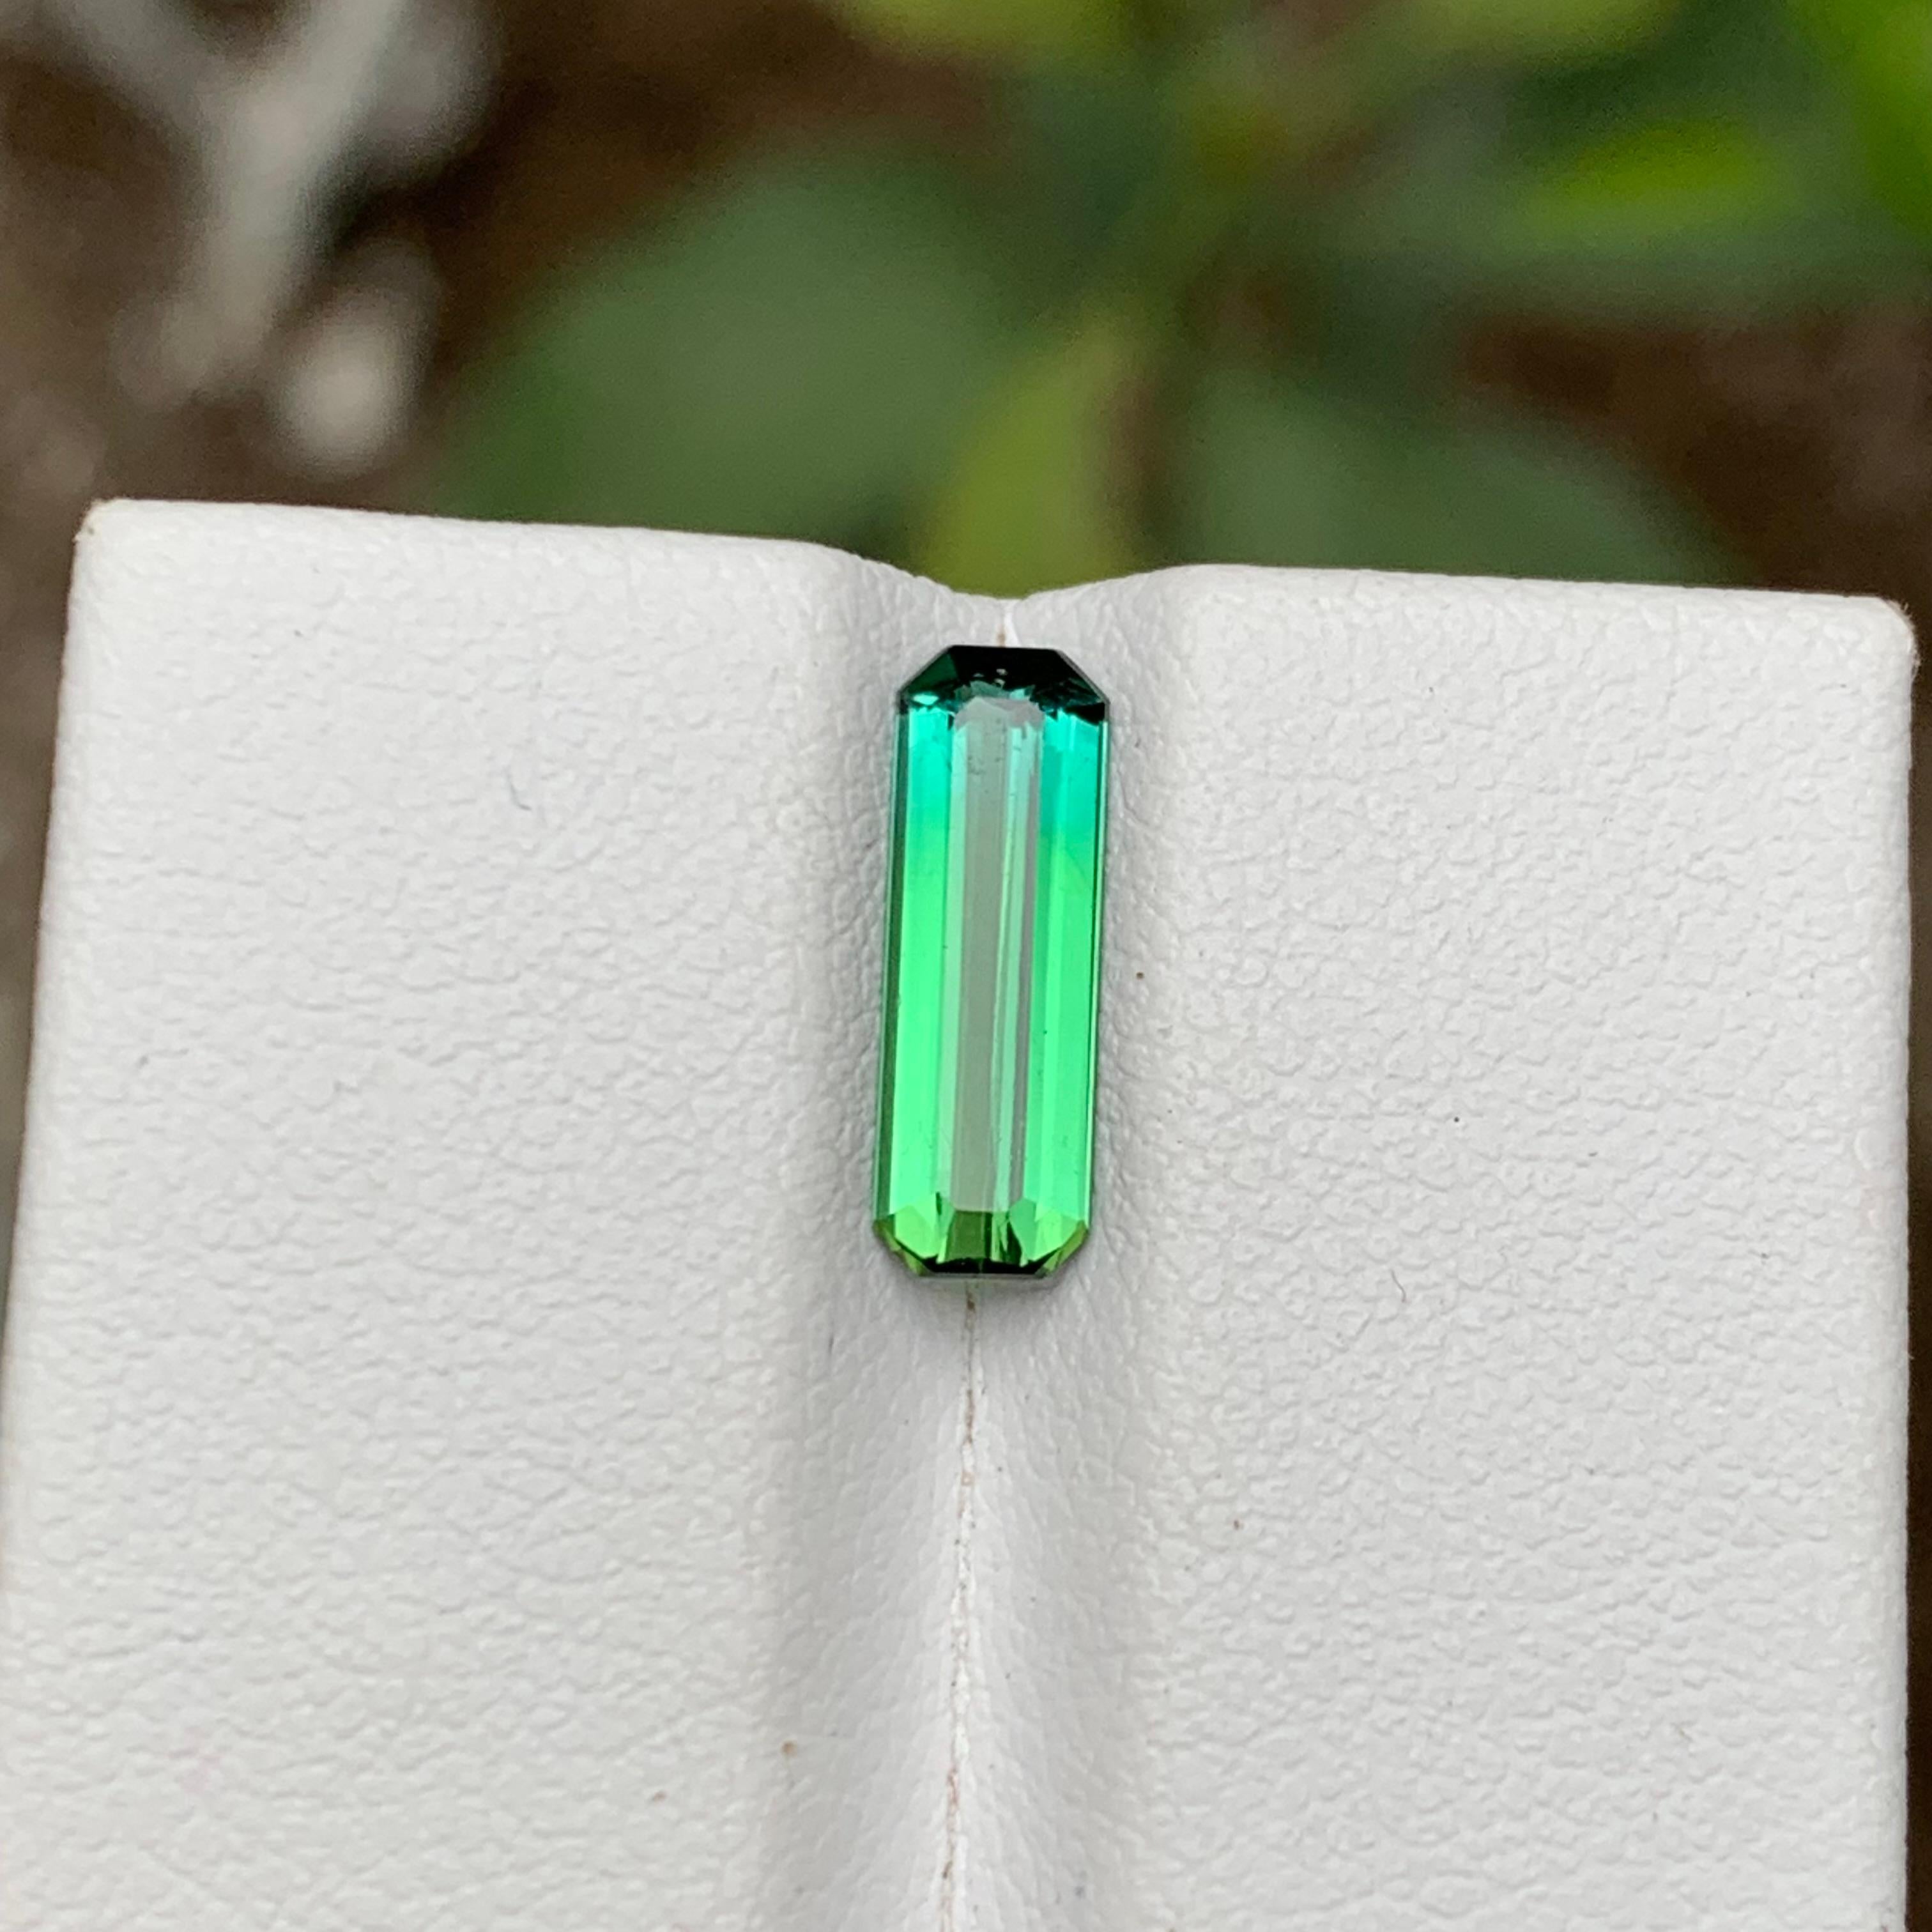 Rare Vivid Neon Green & Light Neon Blue Bicolor Tourmaline Gemstone, 1.5 Ct-Ring For Sale 2